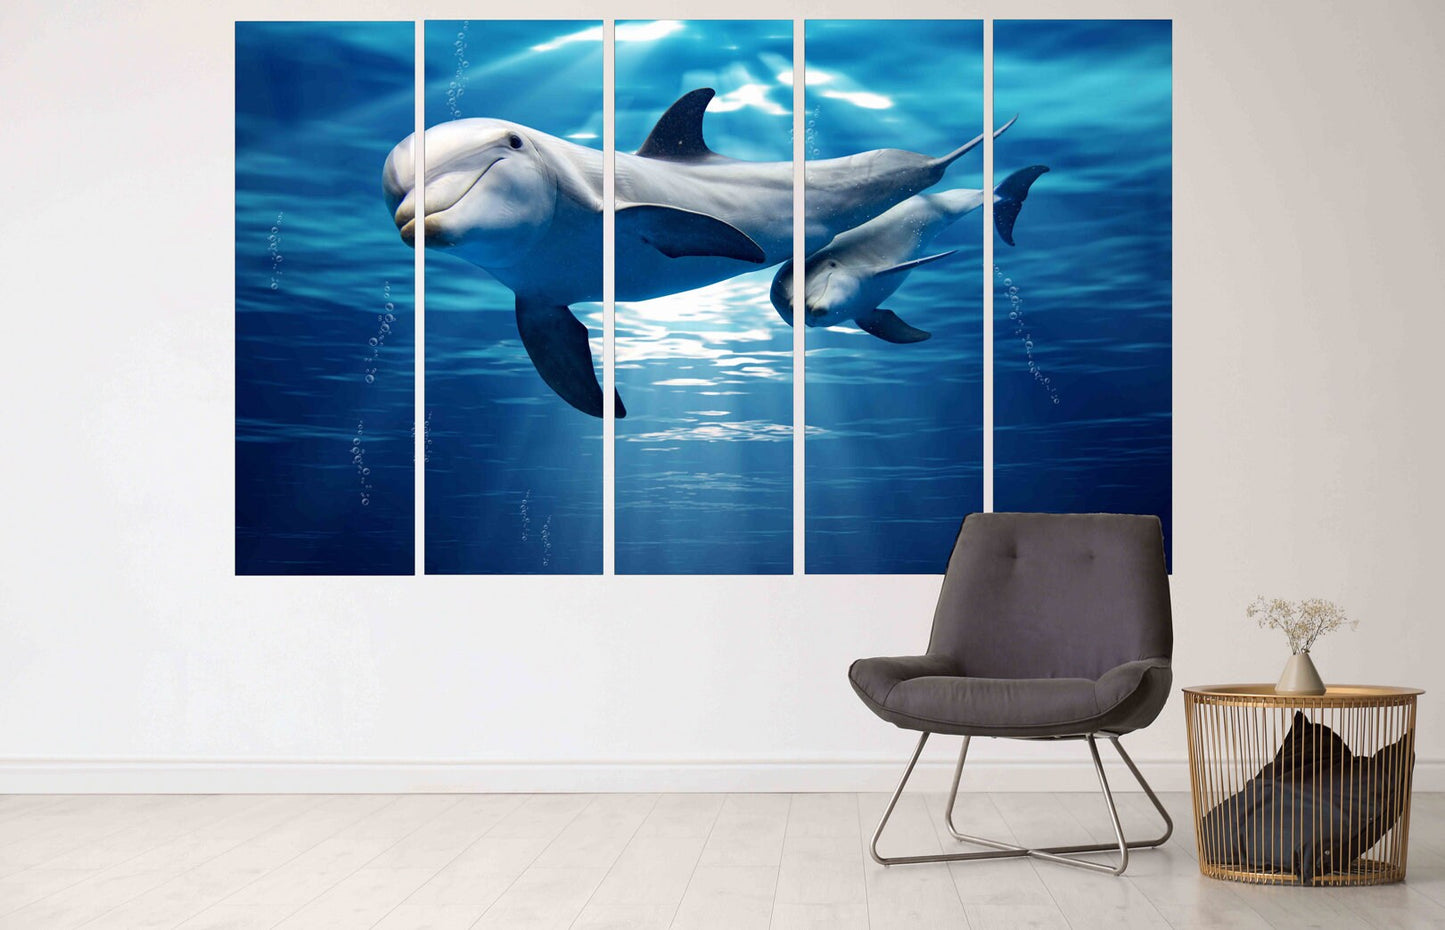 Dolphin wood wall artwall decor canvas painting bright wall art extra large wall art Dolphin canvas art Marine wall art  fish wall art